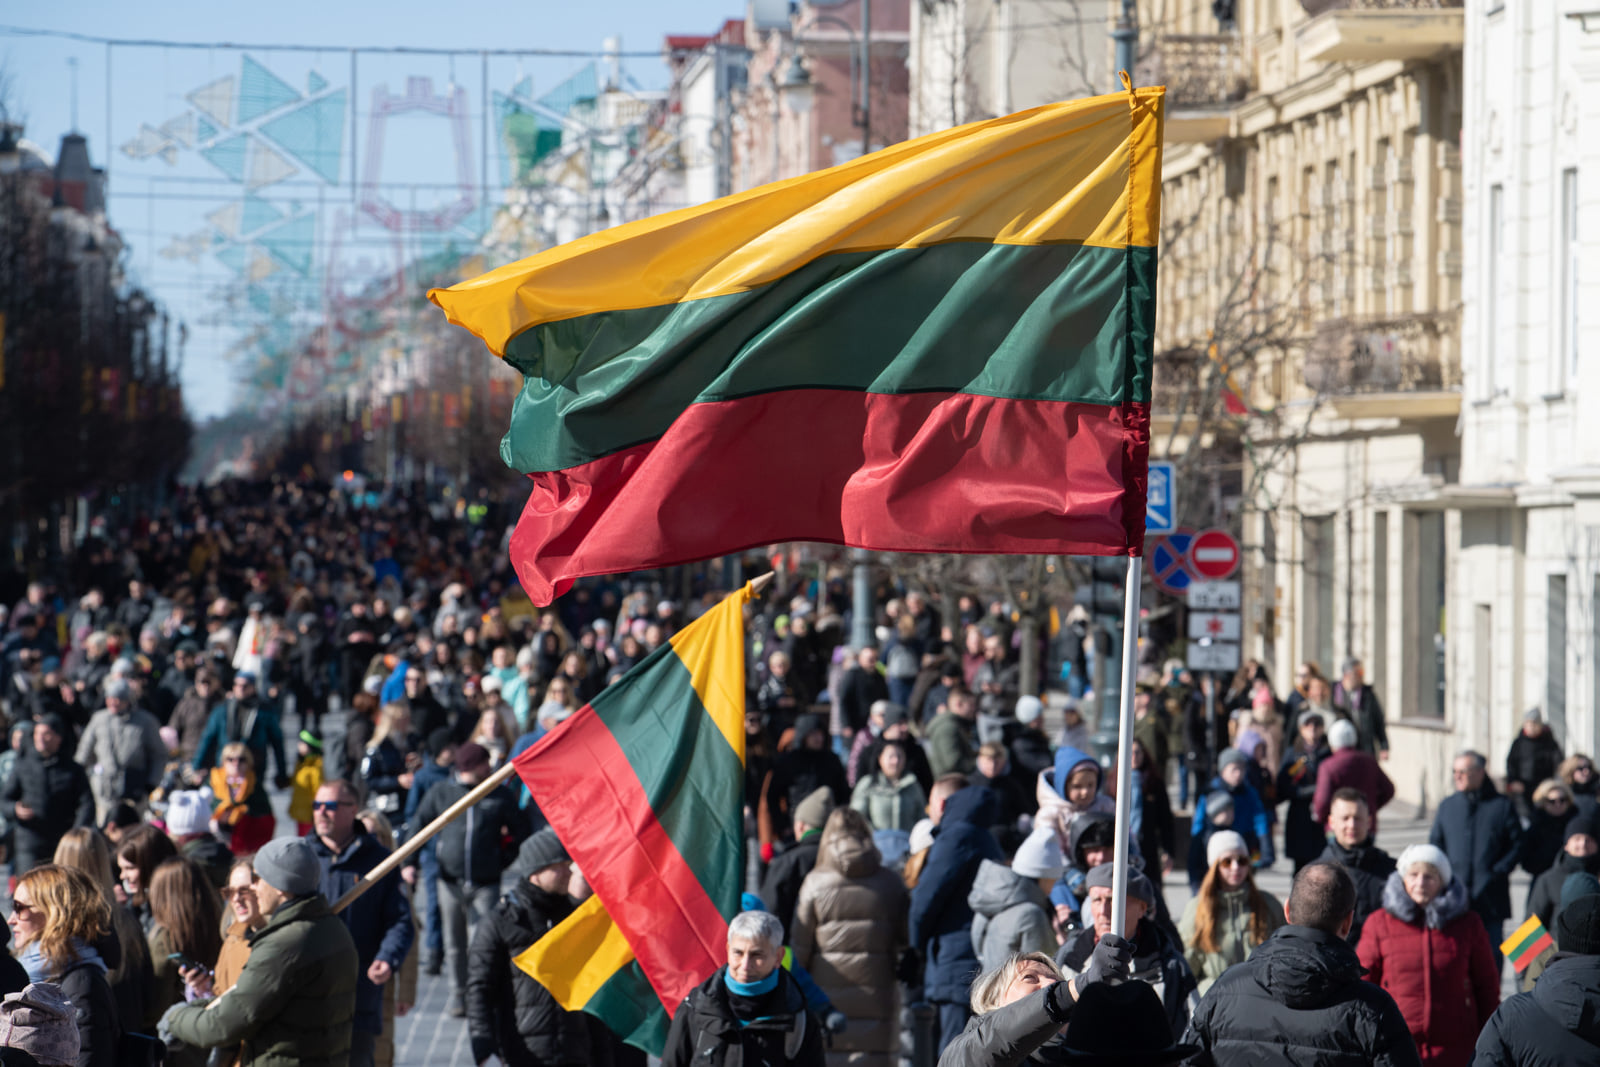 Lithuanian flags wave above public crowd.